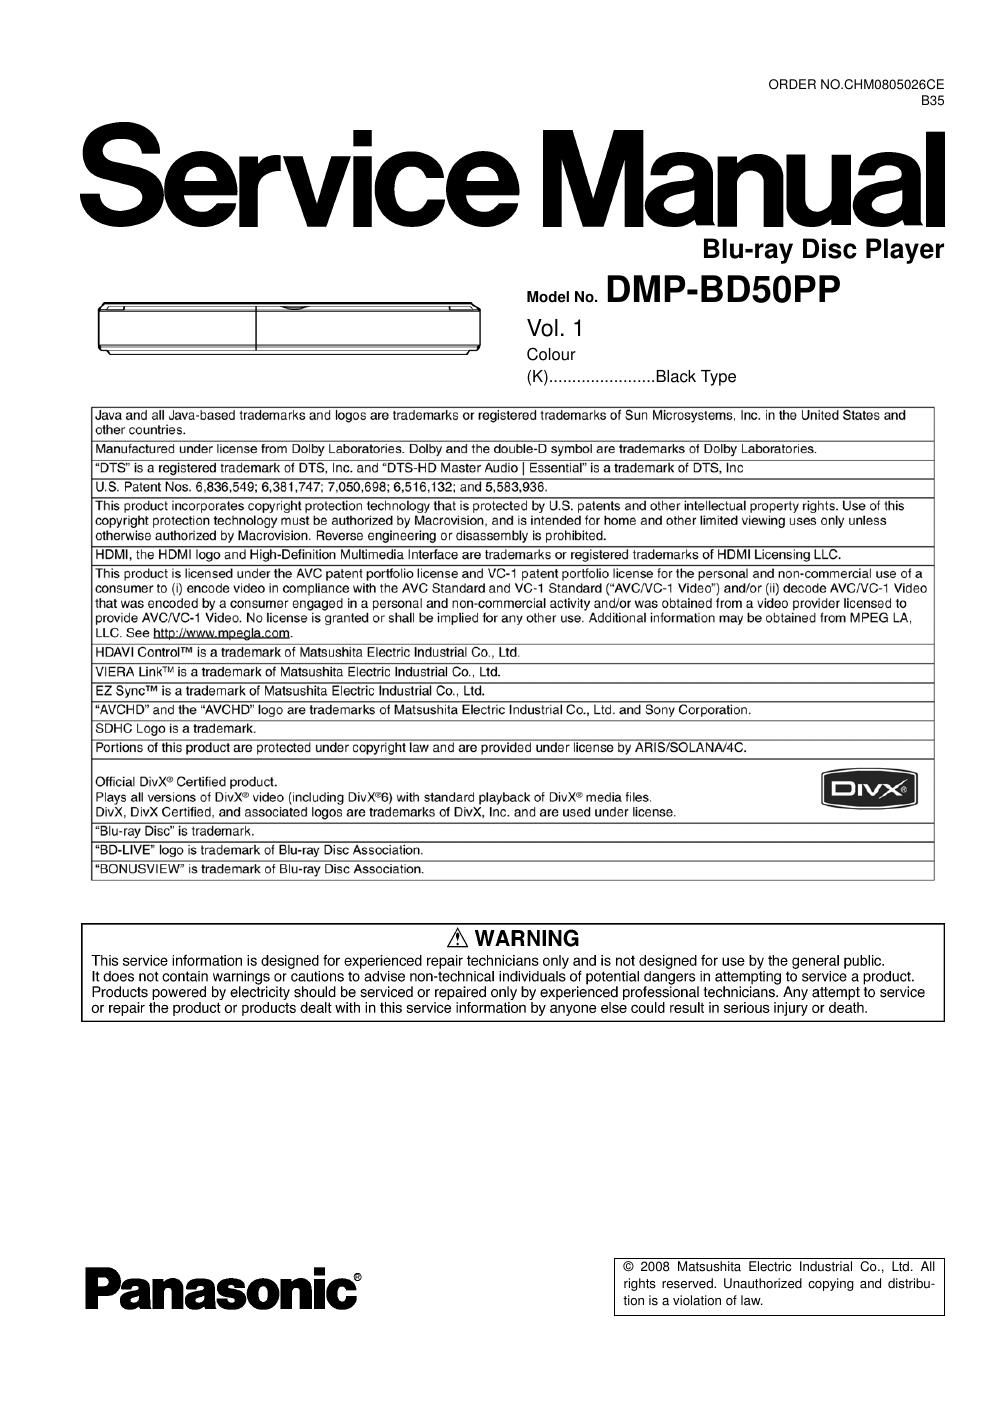 panasonic dmp bd 50 pp service manual